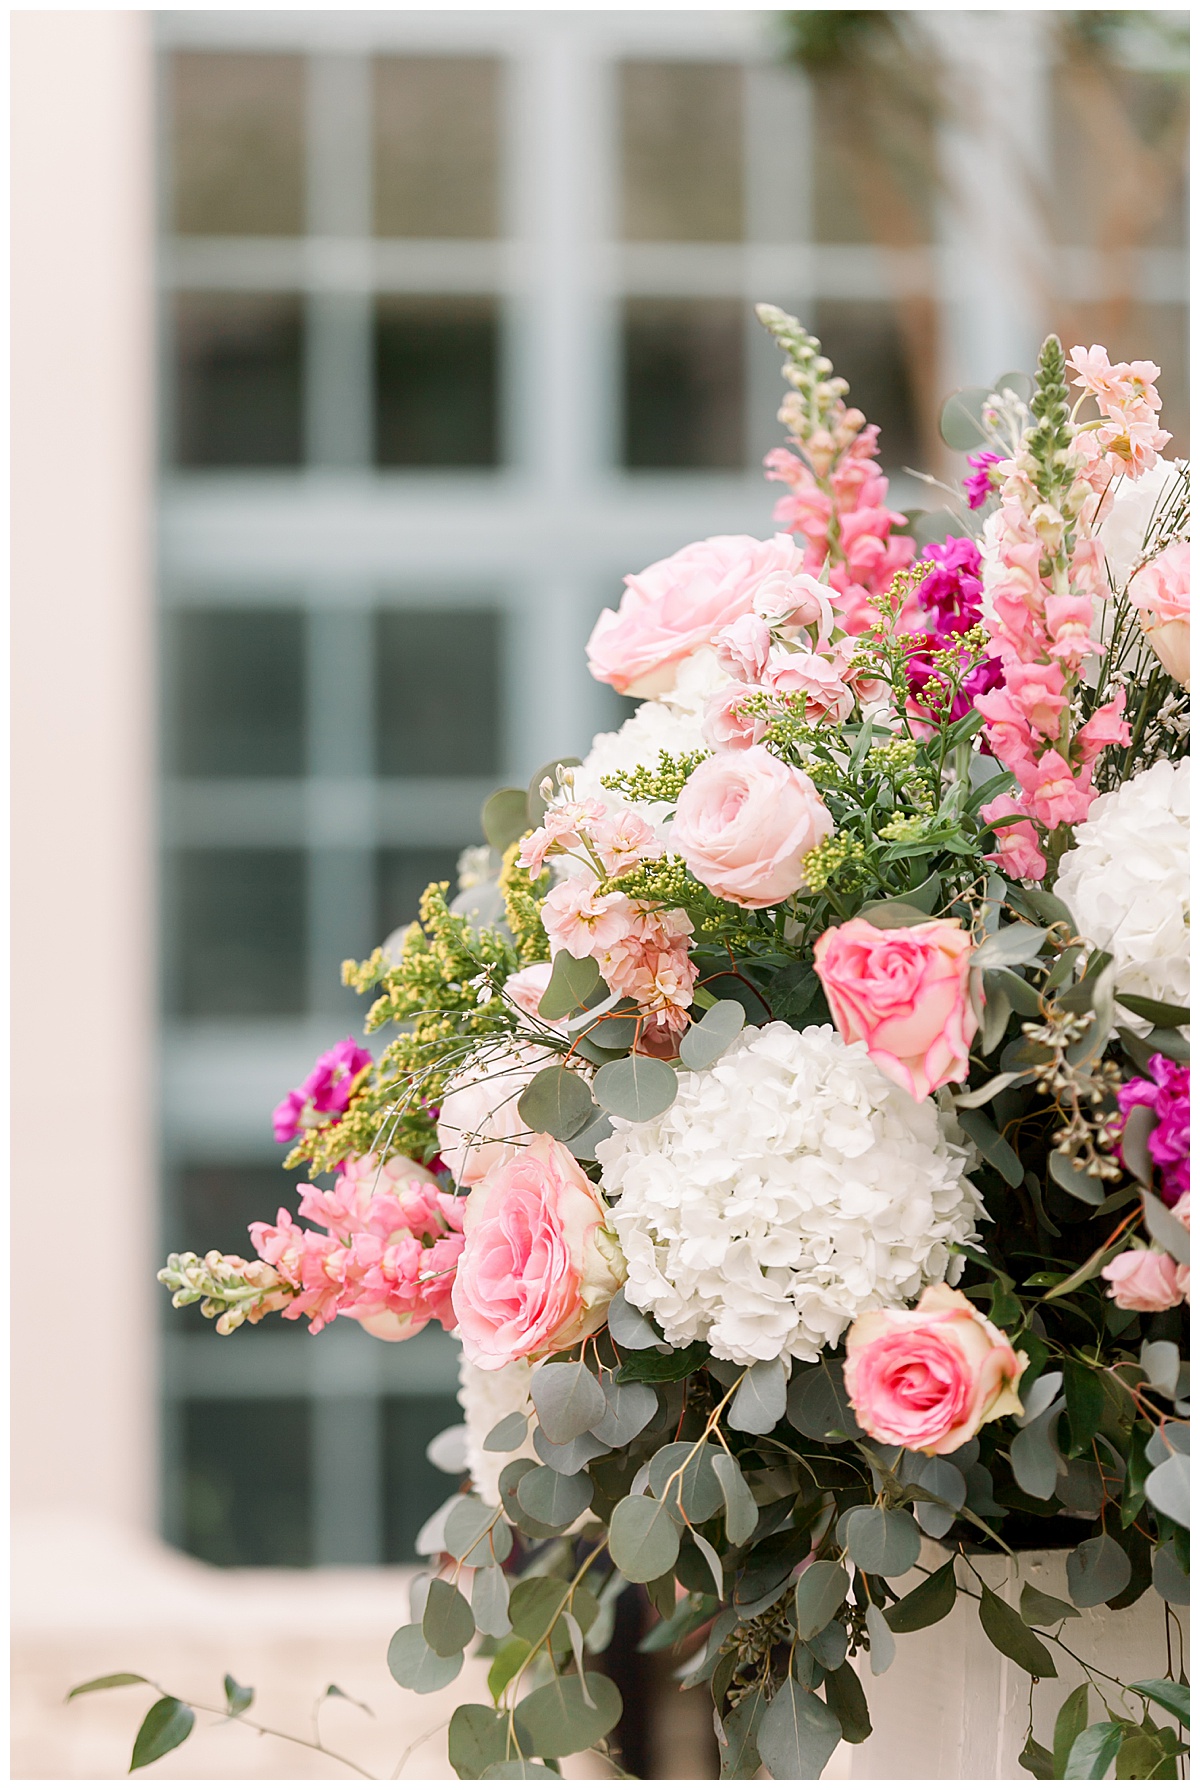 Floral decorations at Hyatt Regency Hill Country Resort Wedding in San Antonio, TX | San Antonio Wedding photographer| Destination Wedding Photographer| Monica Roberts Photography | monicaroberts.com